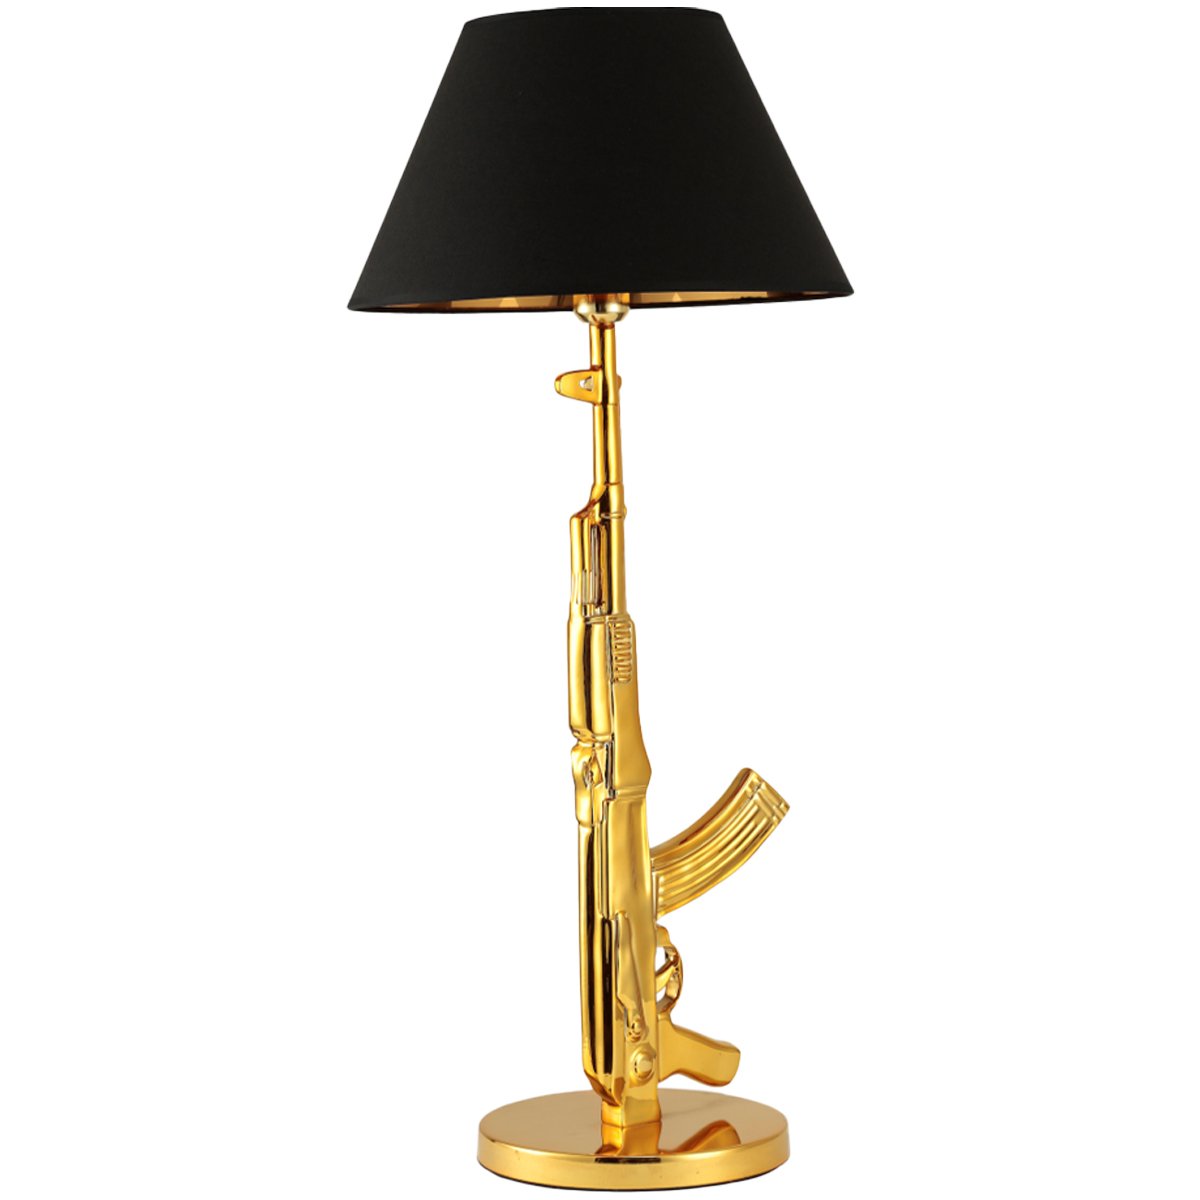 CGC LEELA Gold AK47 Table Lamp